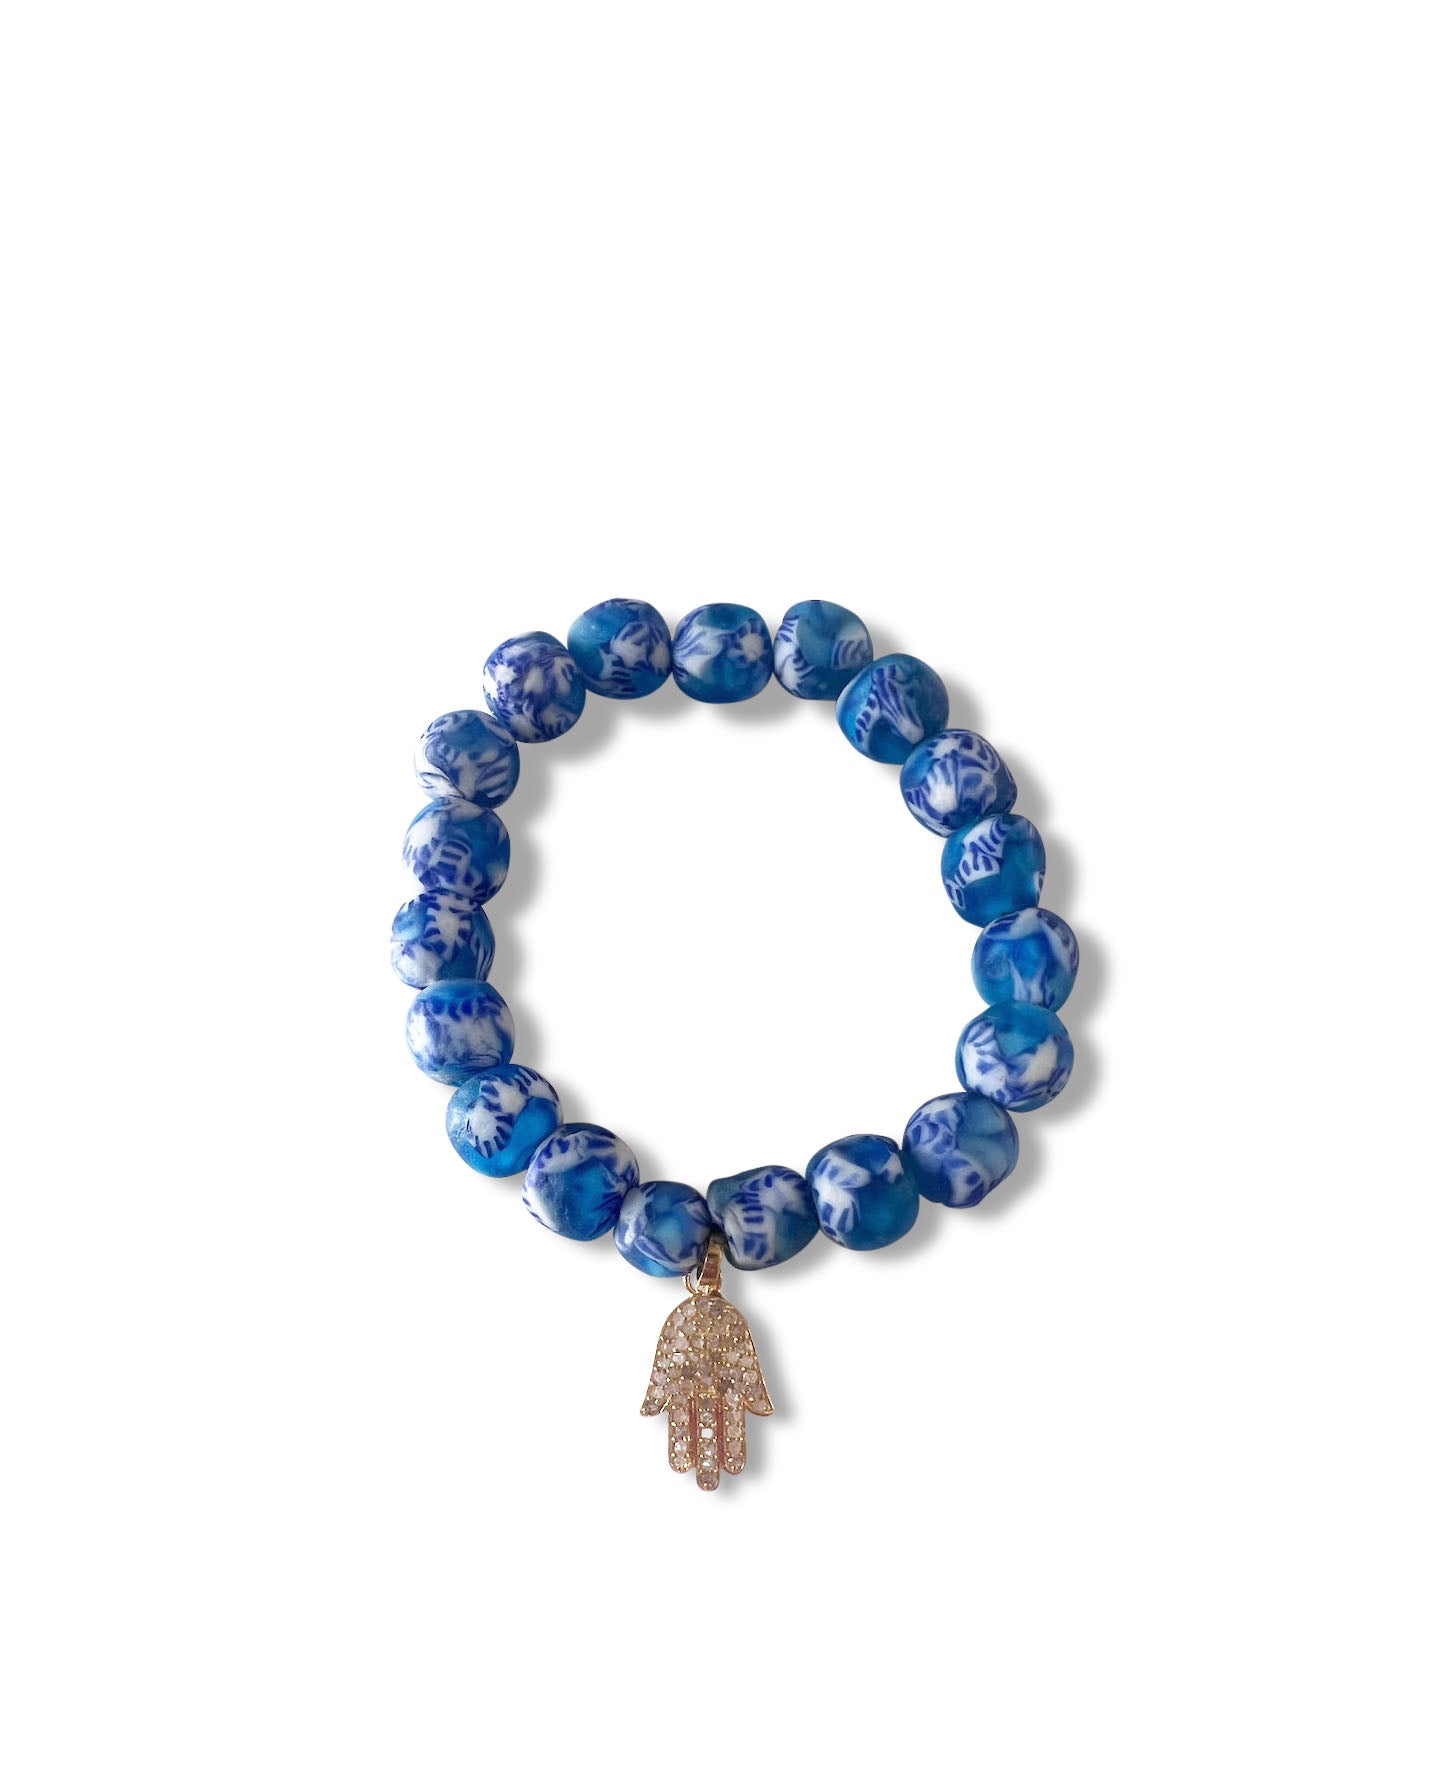 Blue African Krobo Beads with Gold Hamsa